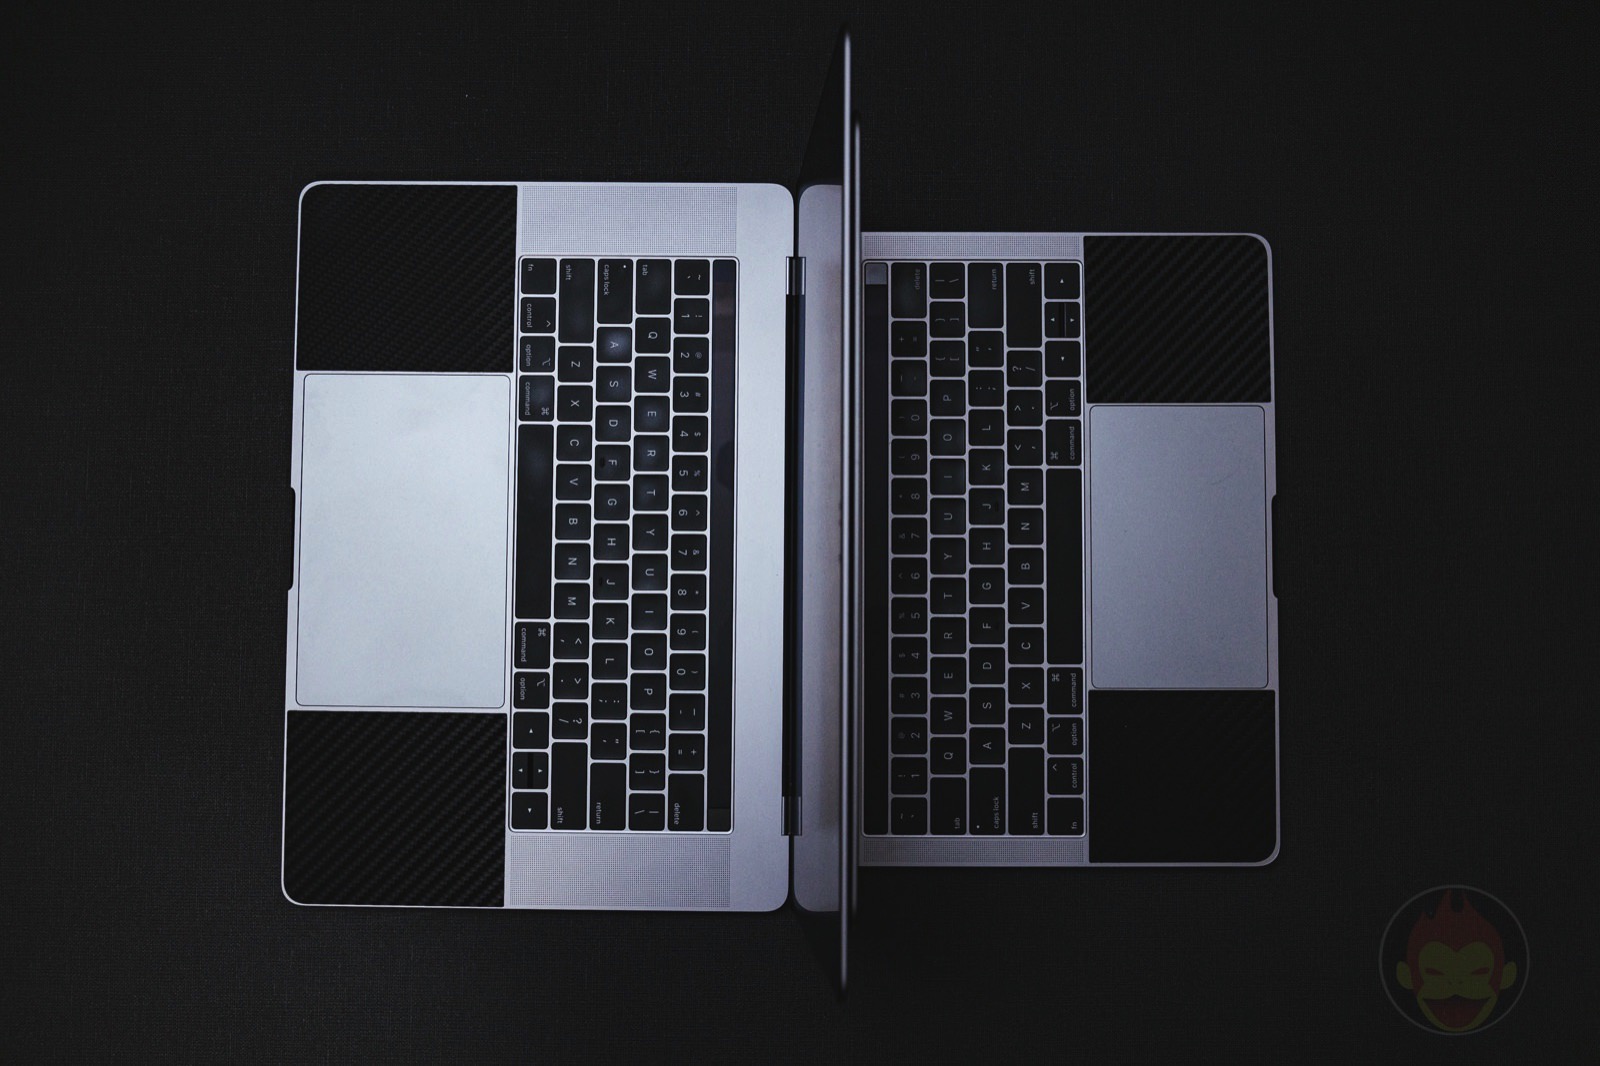 MacBook-Pro-13inch-or-15inch-2019-comparison-02.jpg